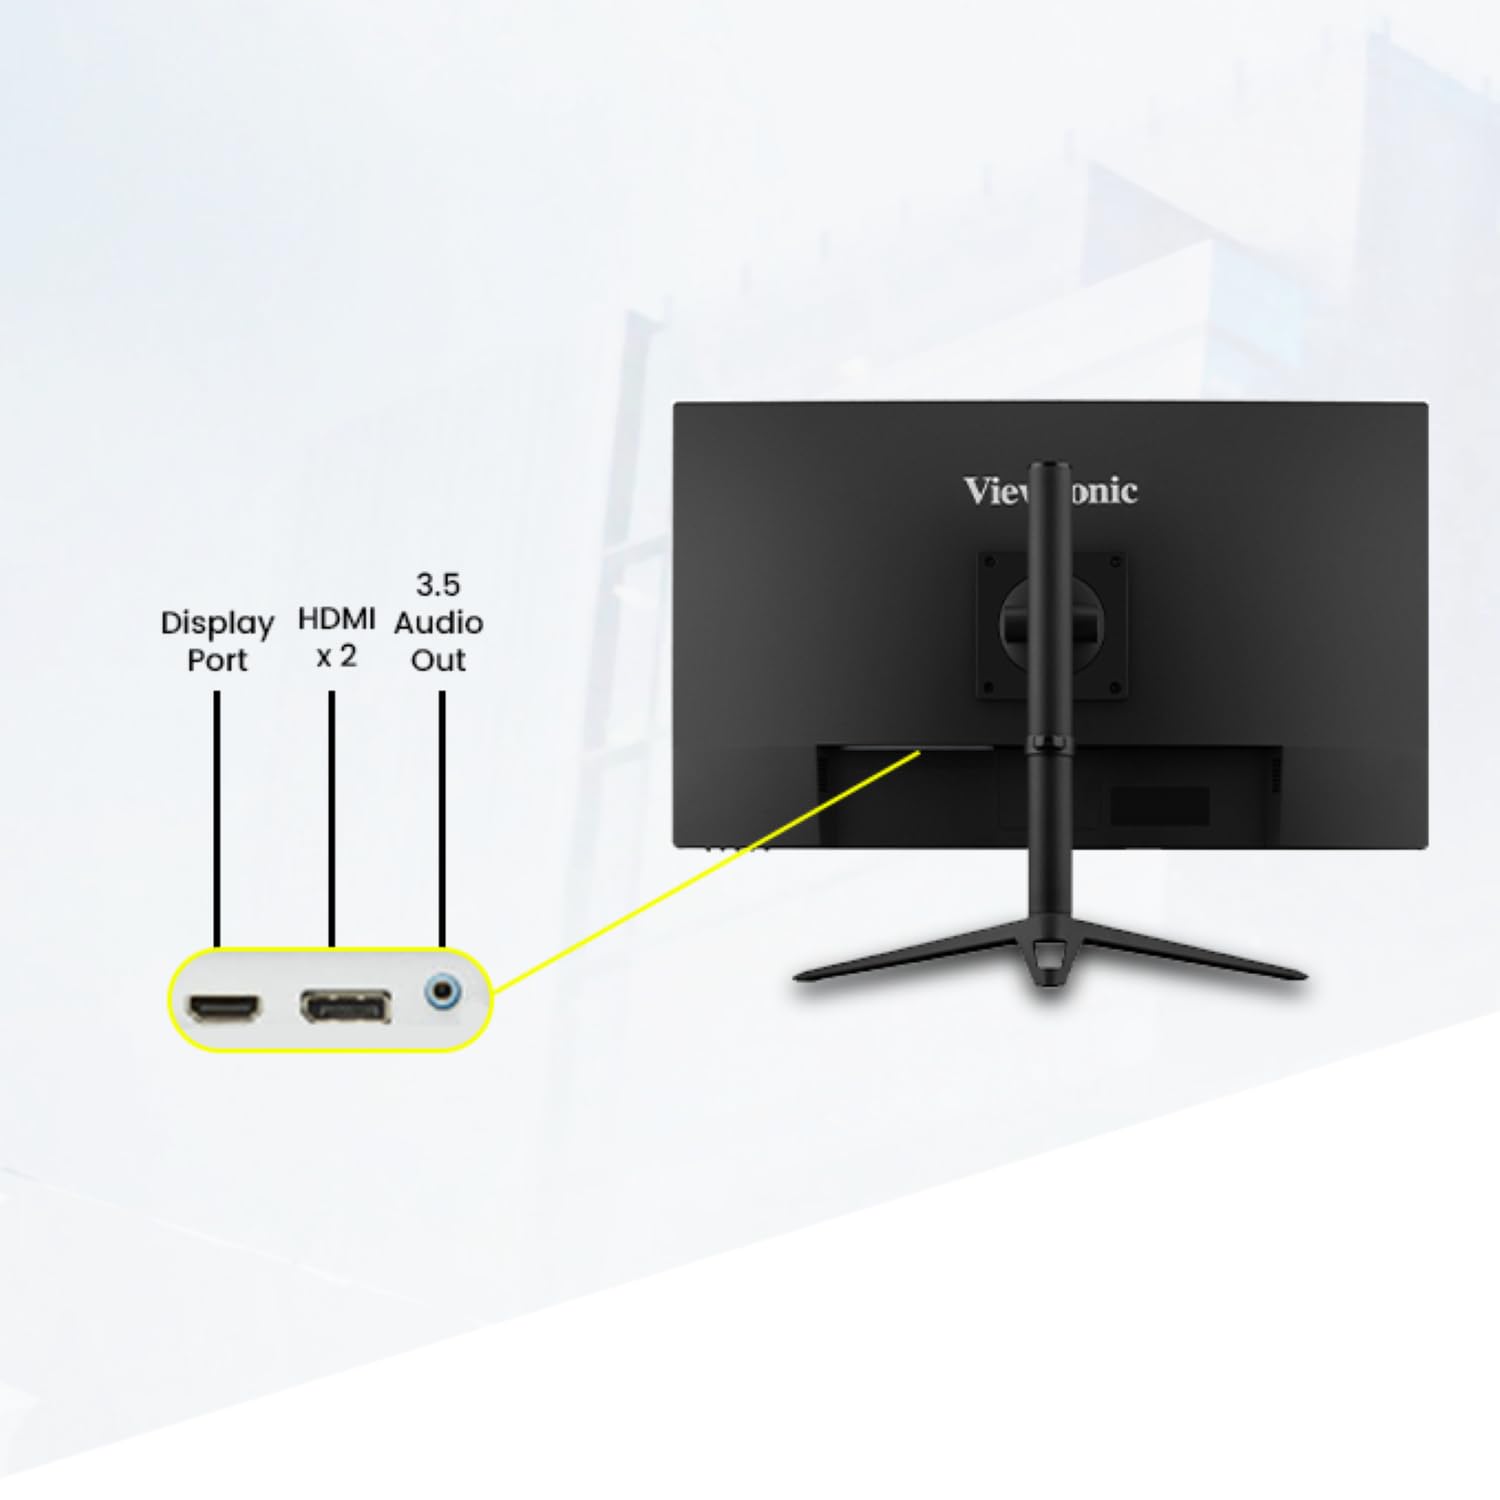 ViewSonic Omni VX2728J 27 Inch Gaming Monitor 165hz 0.5ms 1080p IPS with FreeSync Premium, Advanced Ergonomics, HDMI, DisplayPort, Black